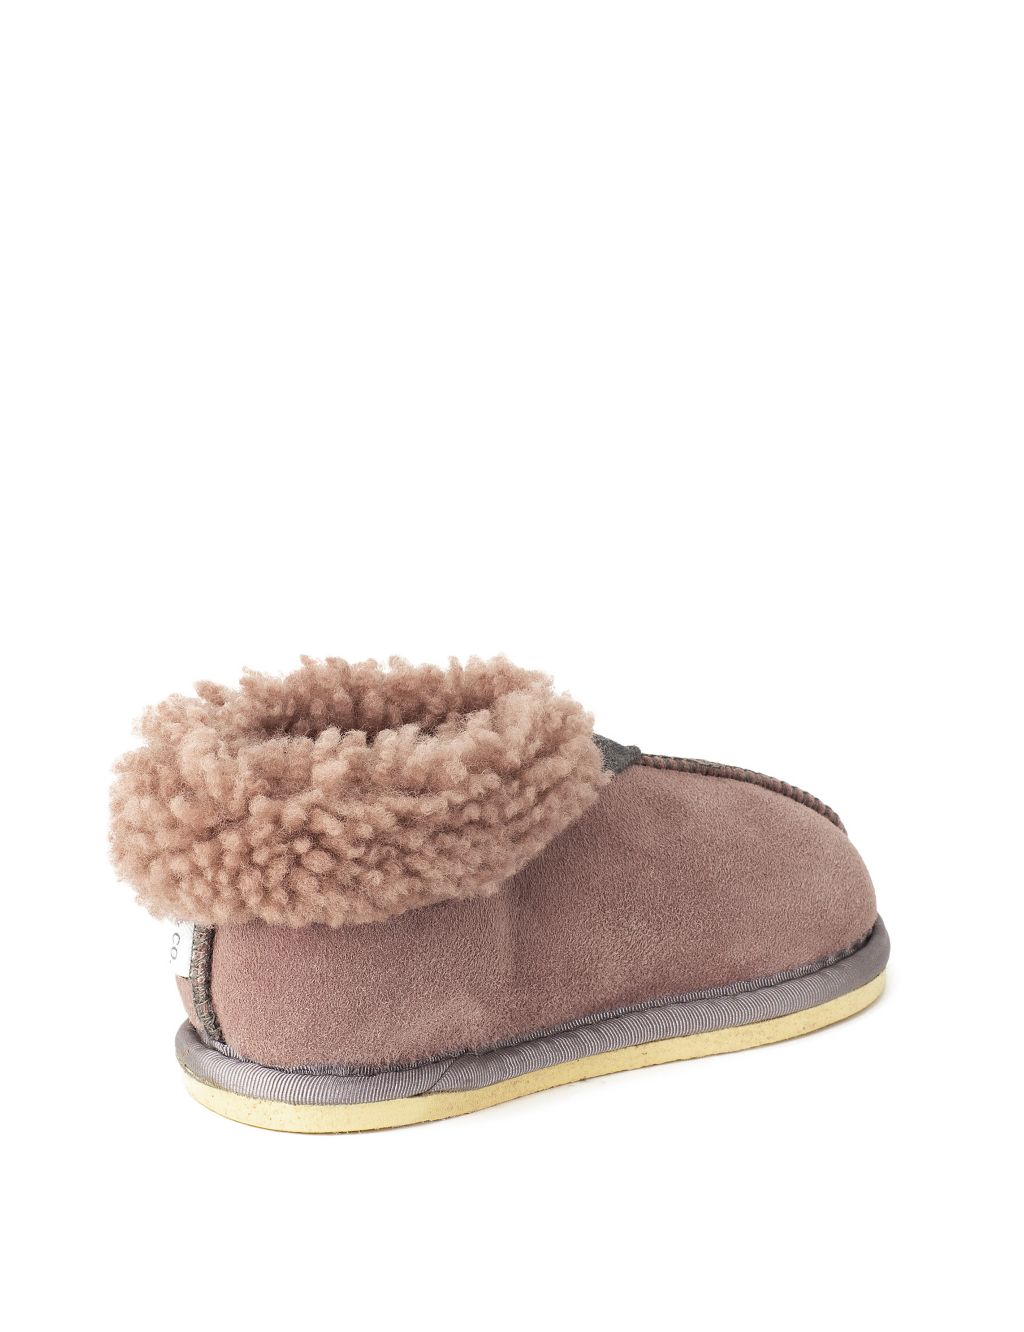 Kids' Sheepskin Slipper Boots image 4